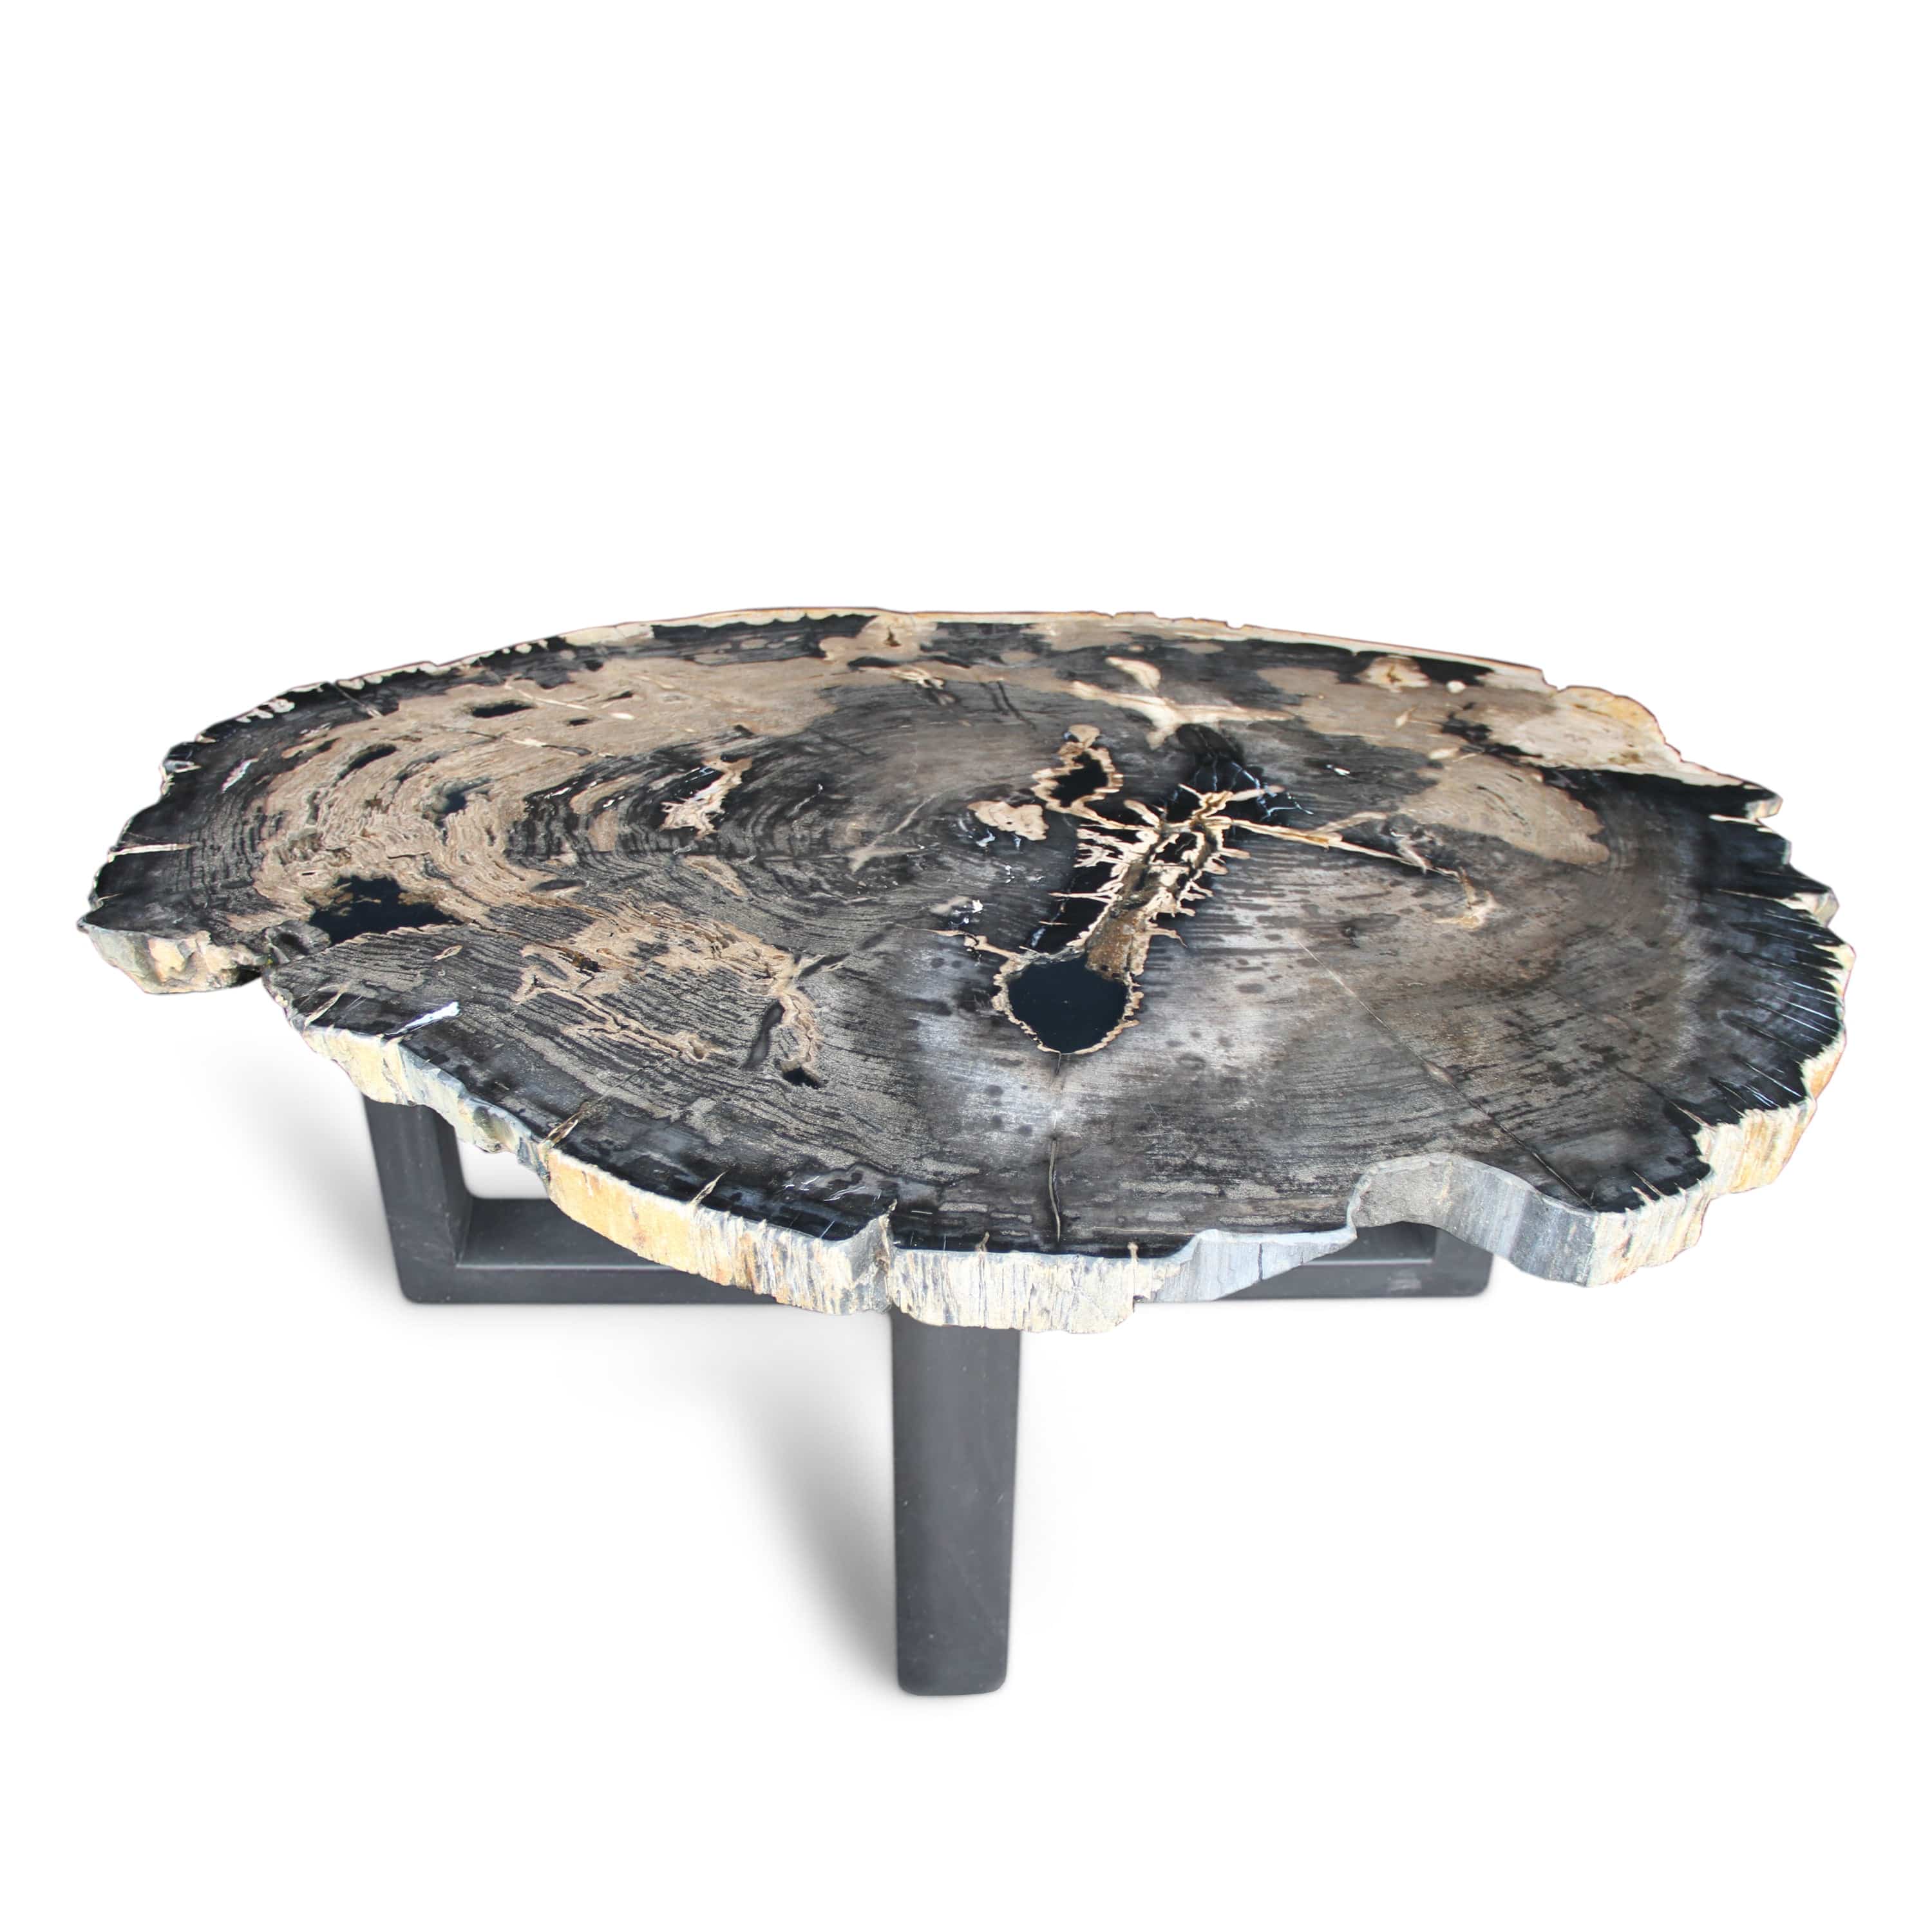 Kalifano Petrified Wood Polished Petrified Wood Coffee Table from Indonesia - 58" / 335 lbs PWT12160.002